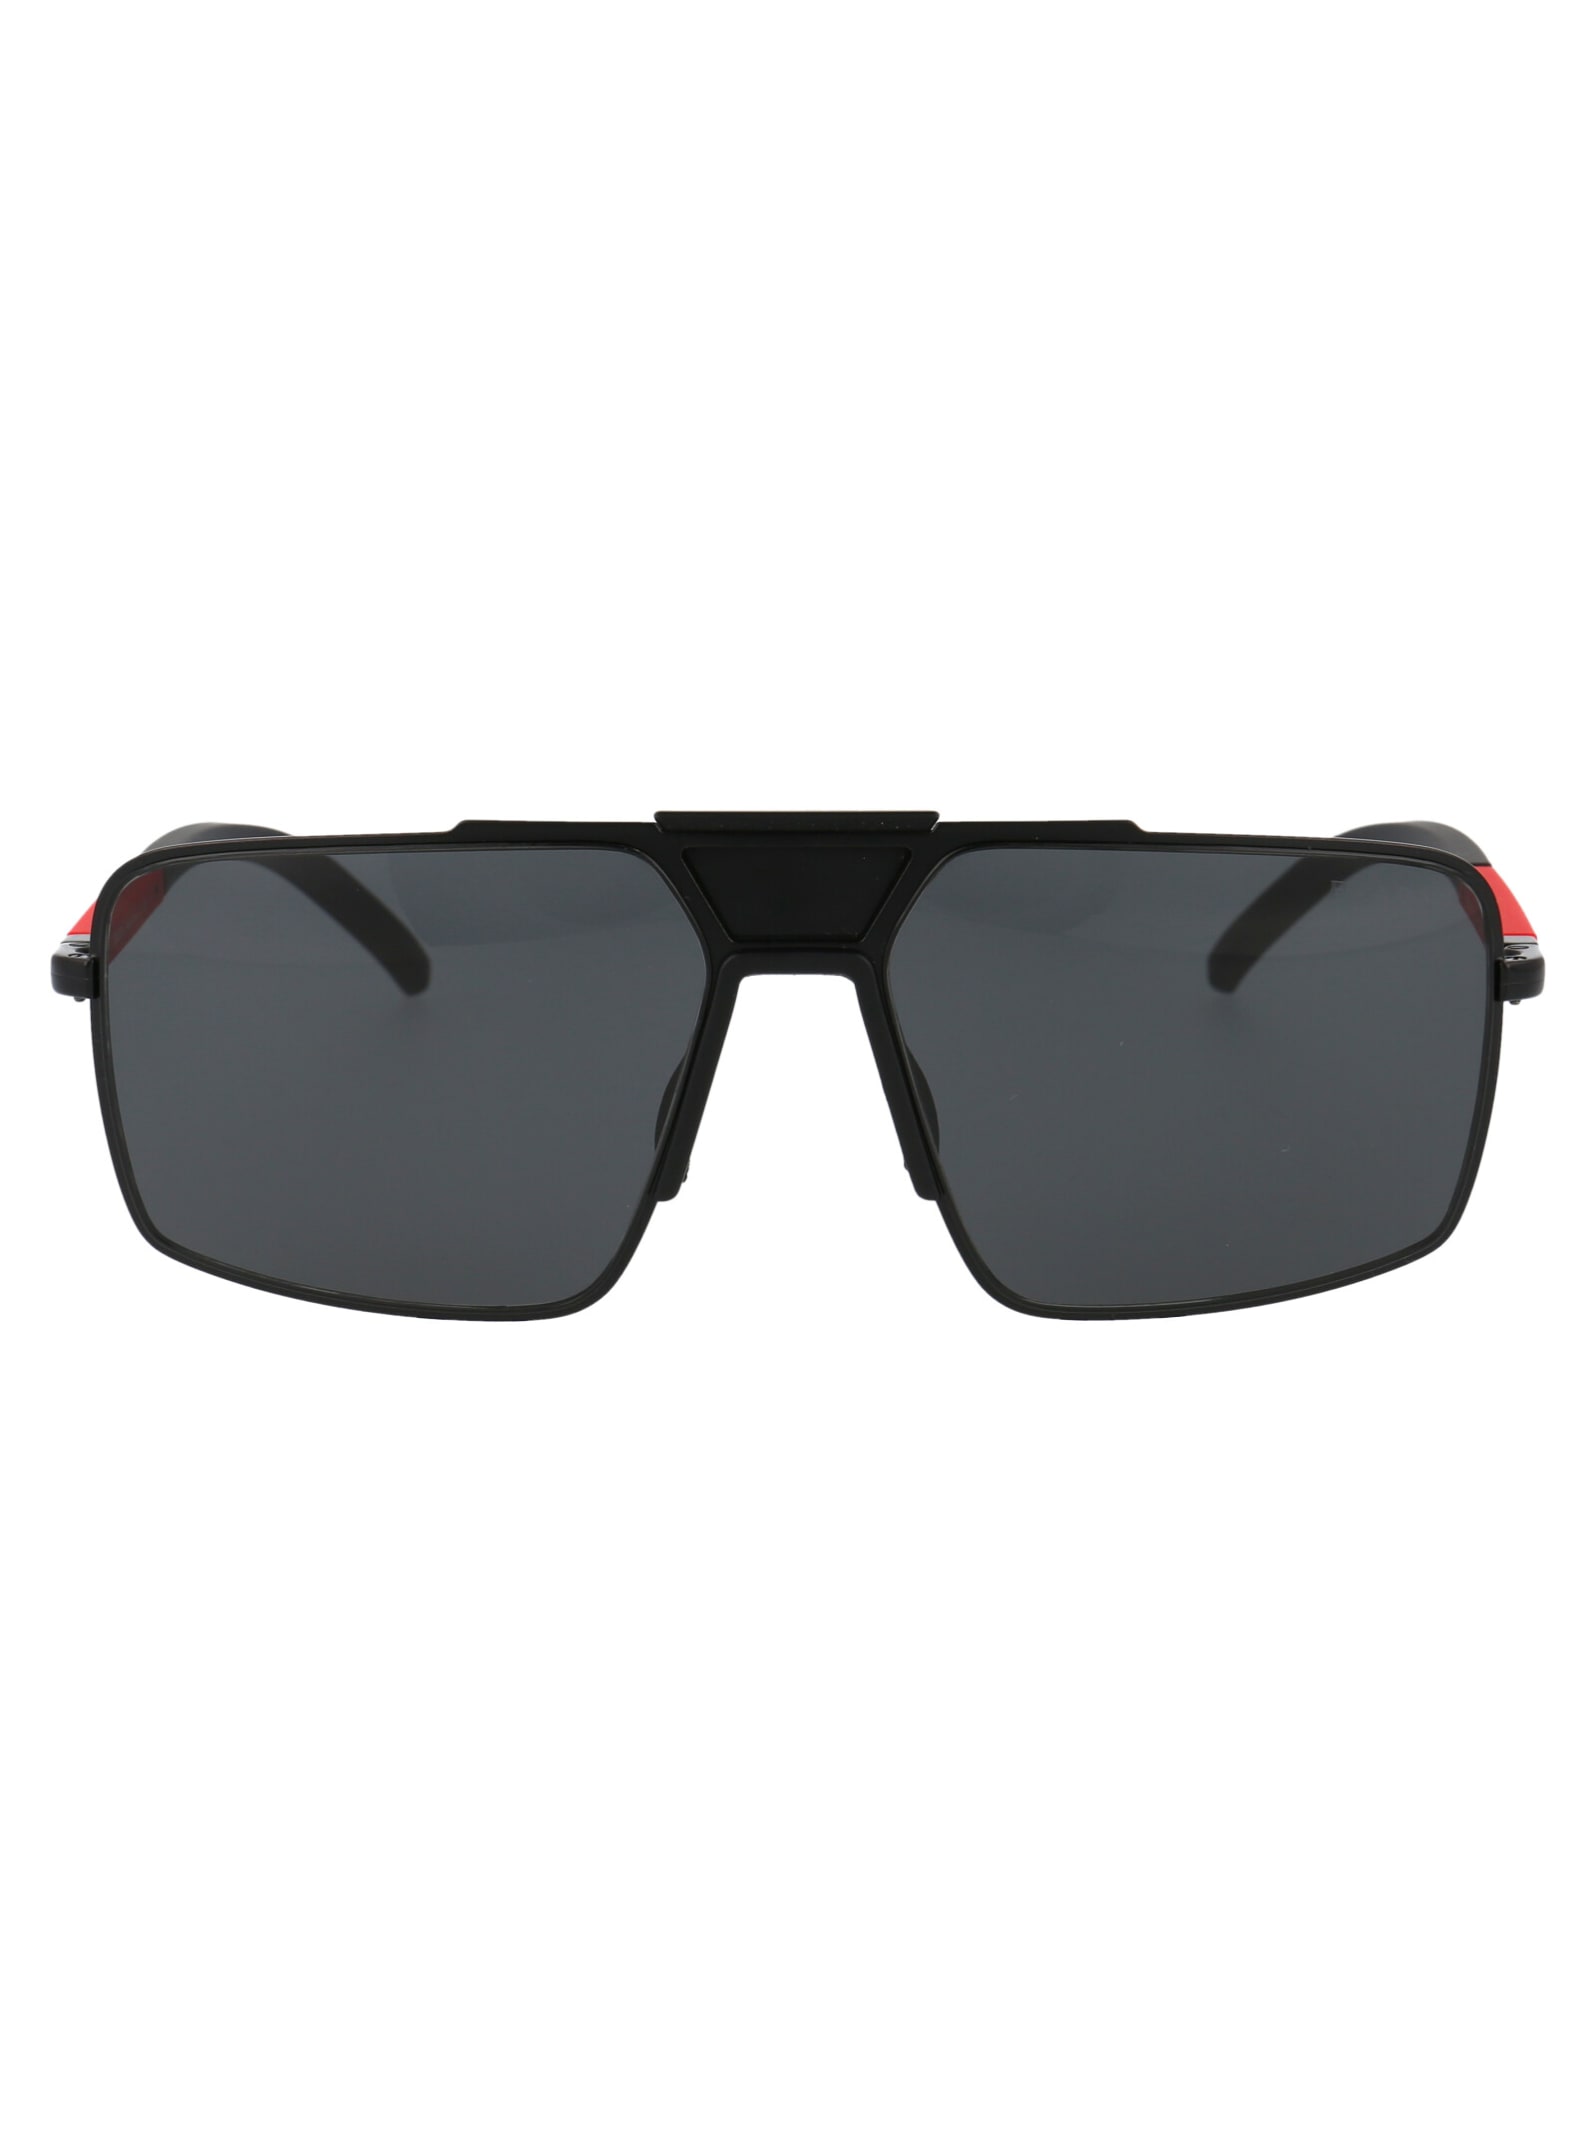 Prada Eyewear 0ps 52xs Sunglasses